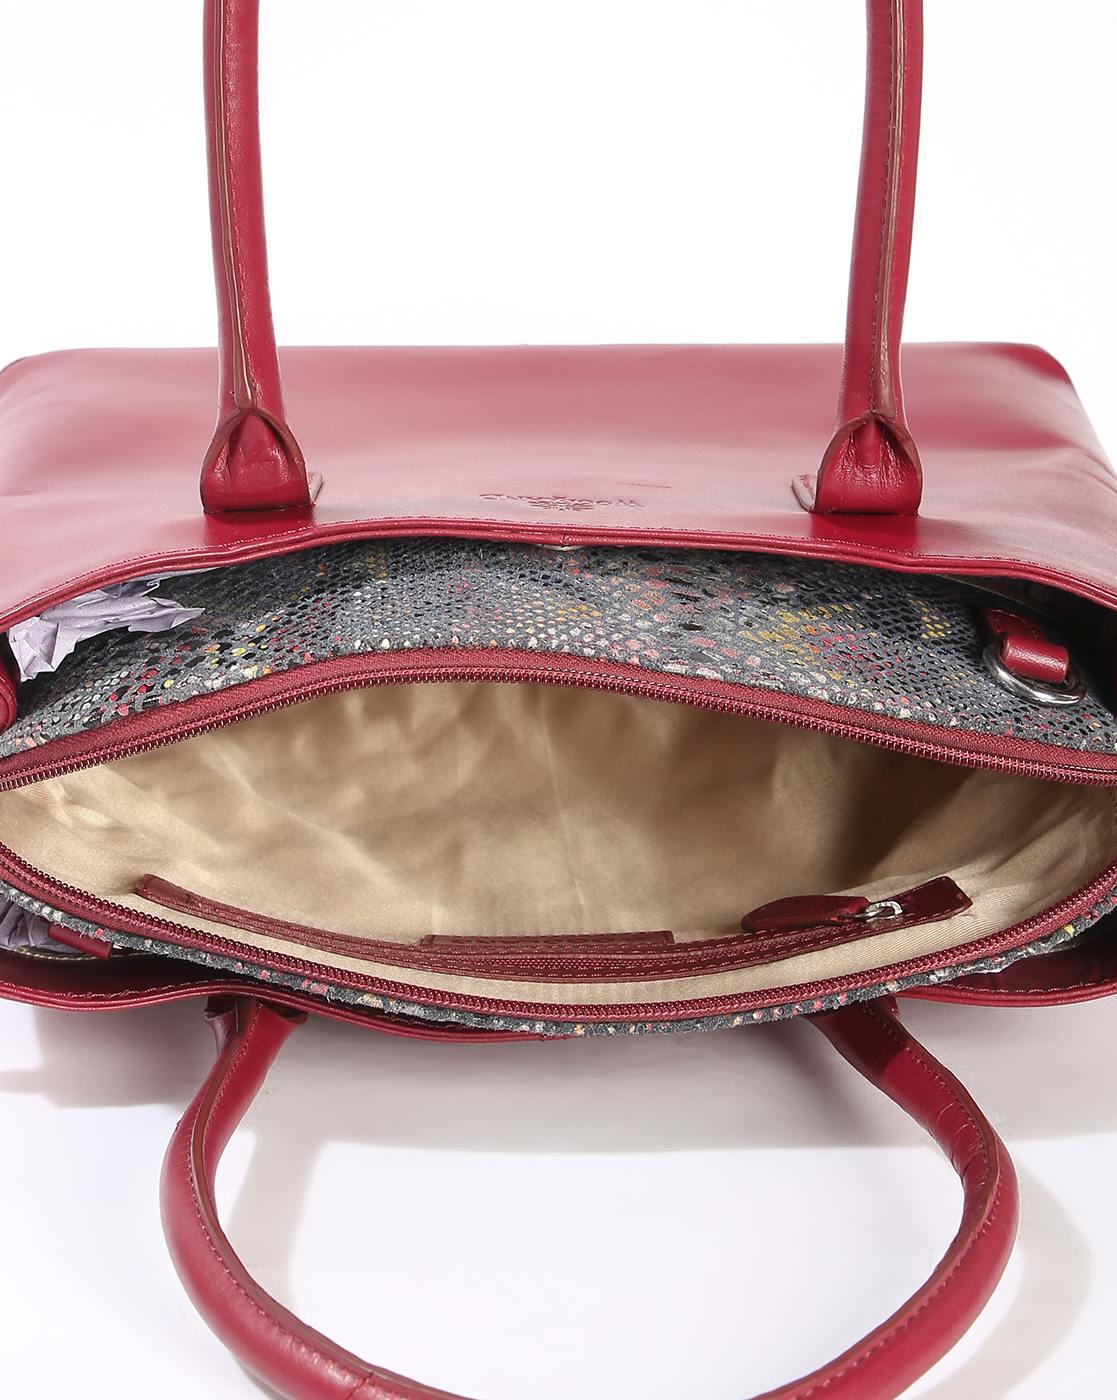 Furla | Bags | Furla Serena Red Pebbled Leather Satchel Purse Bag | Poshmark